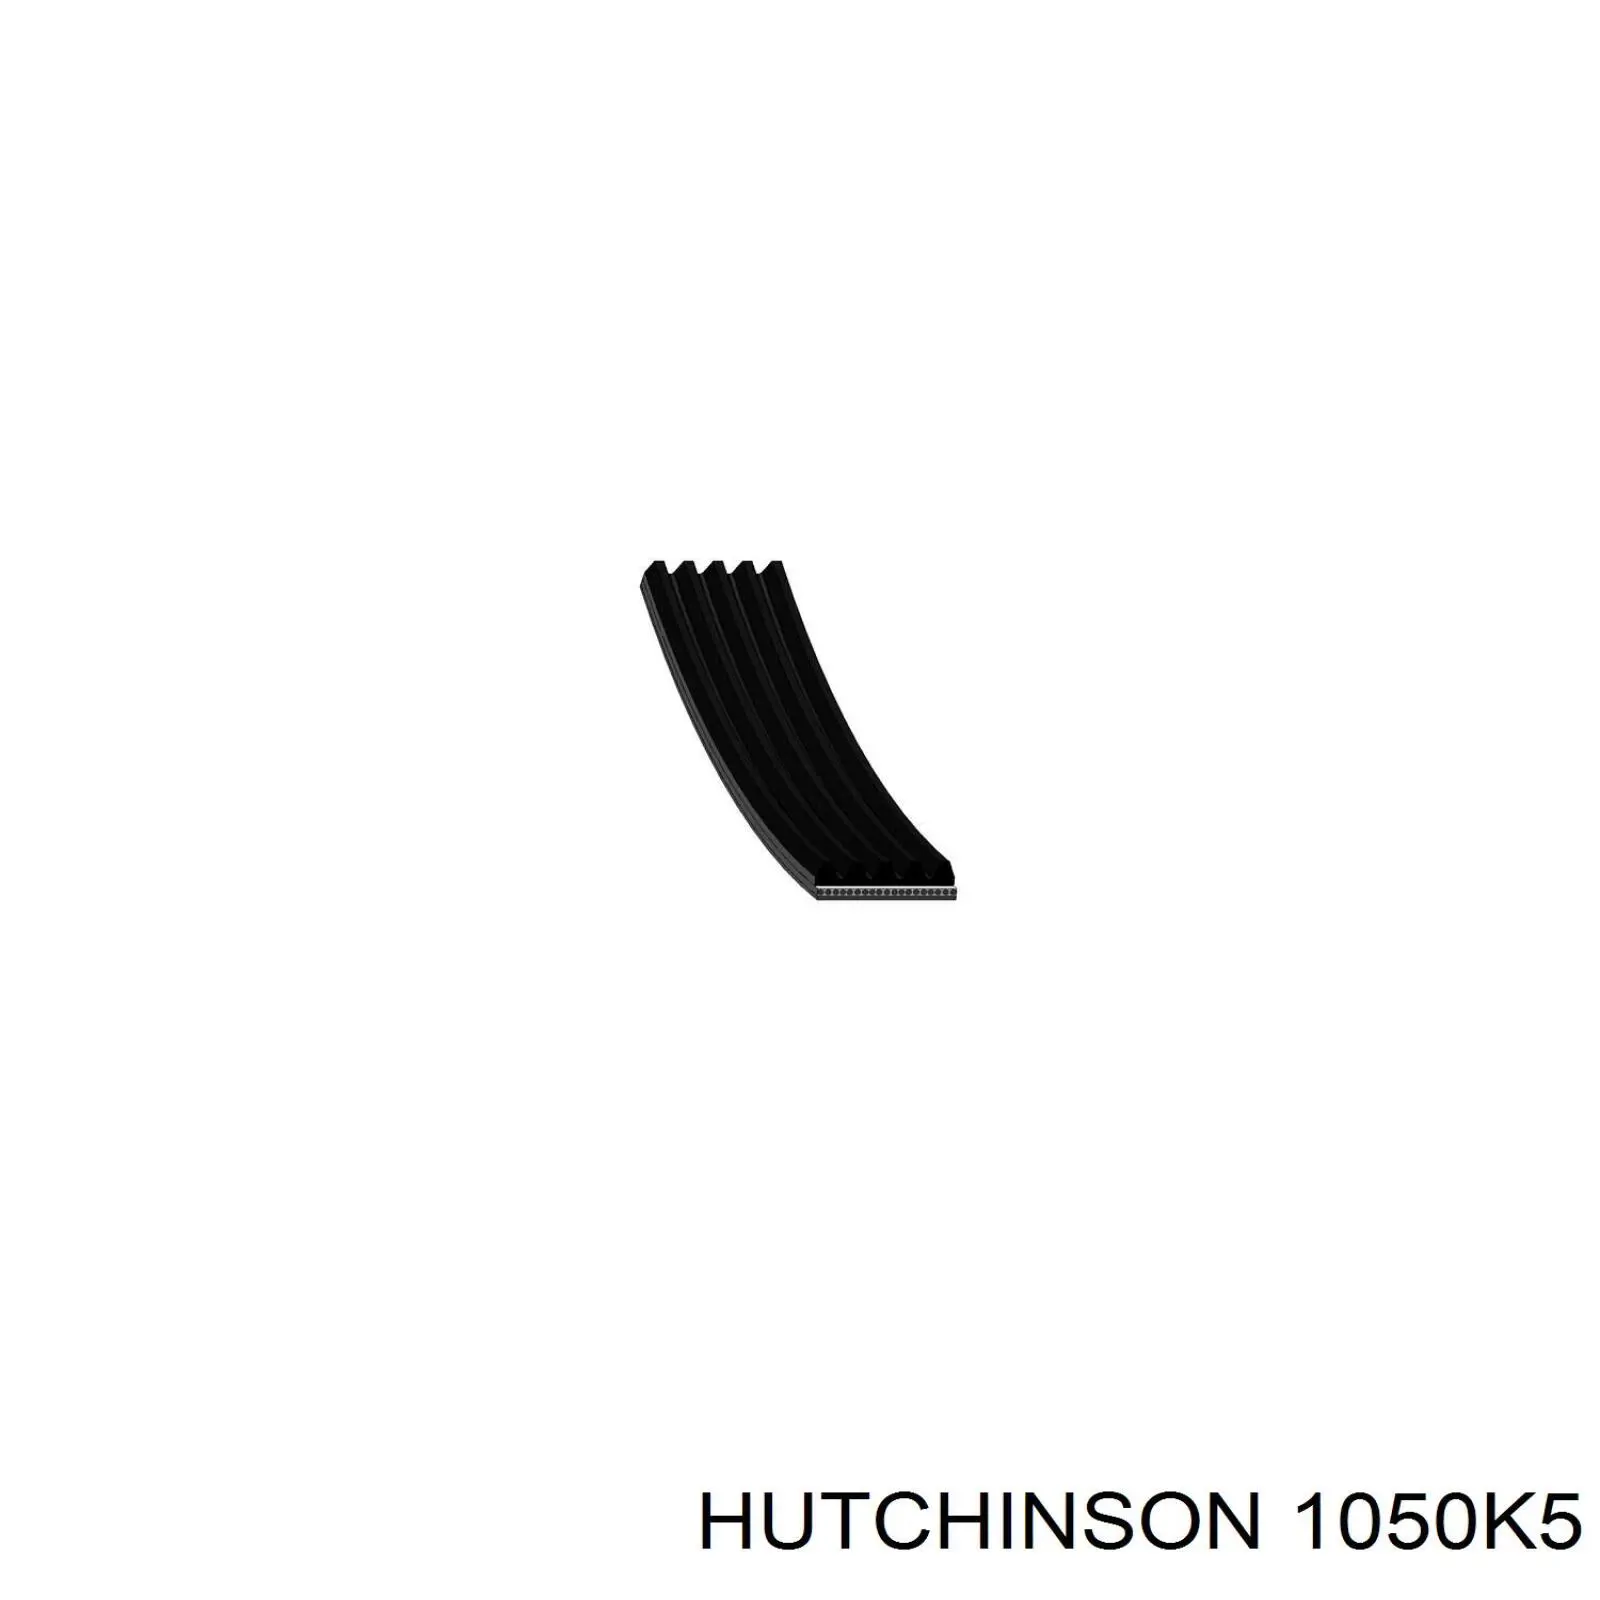 1050K5 Hutchinson correa trapezoidal